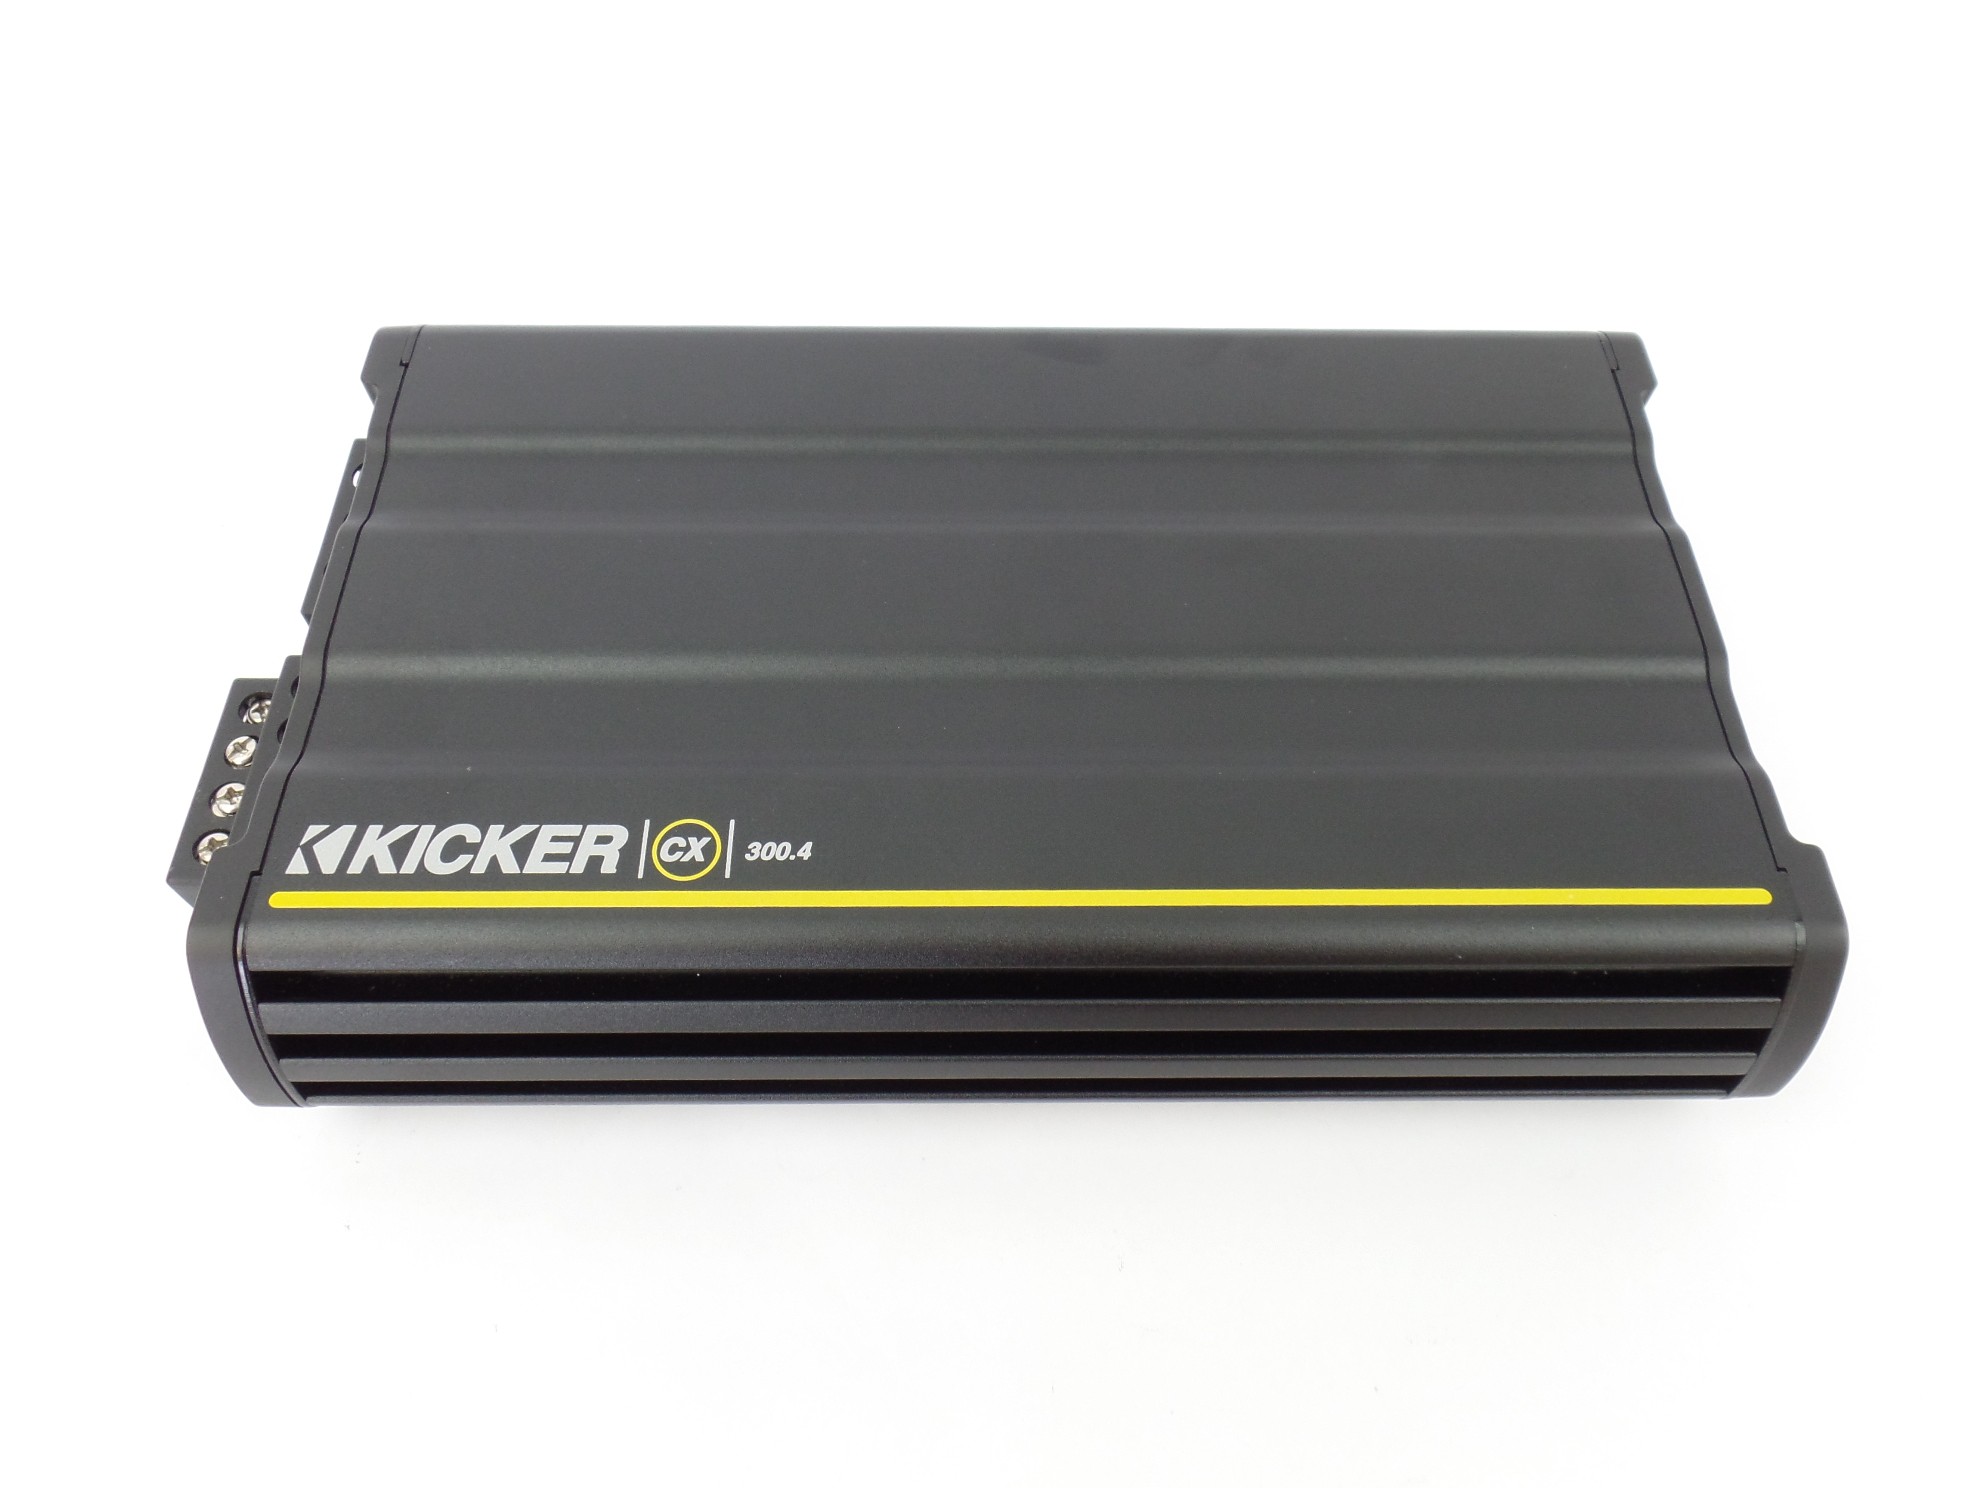 Read: issue 1 channel works only Kicker Car Audio Amplifier CX300.4